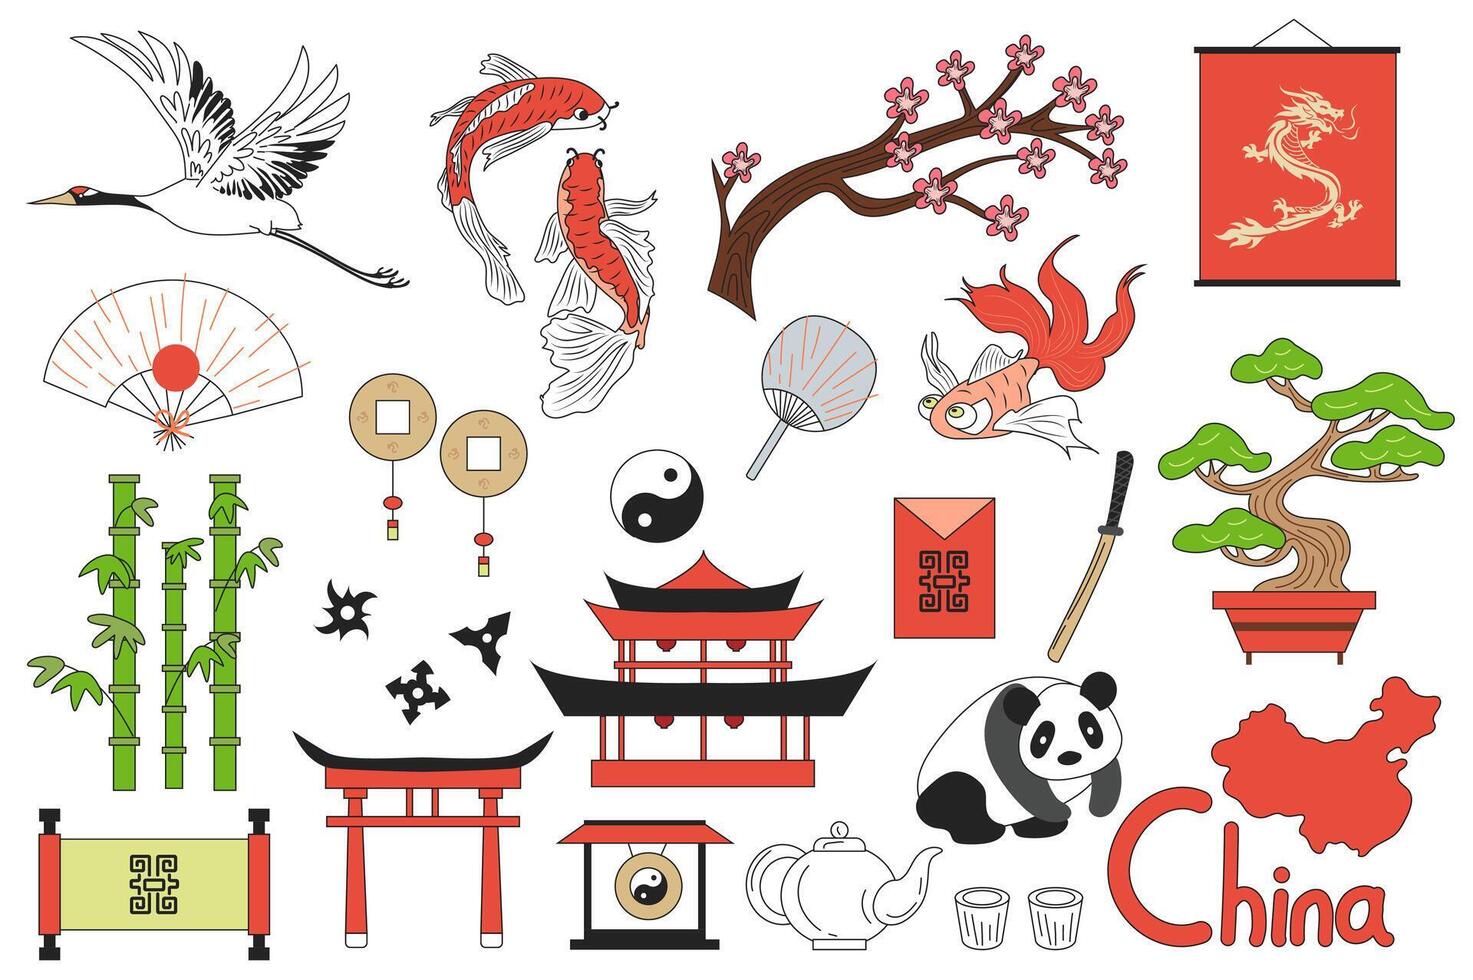 China elements mega set in graphic flat design. Bundle elements of crane, koi fish, sakura, dragon, fans, carp, yin yang, bonsai tree, bamboo, katana and other. Vector illustration isolated stickers